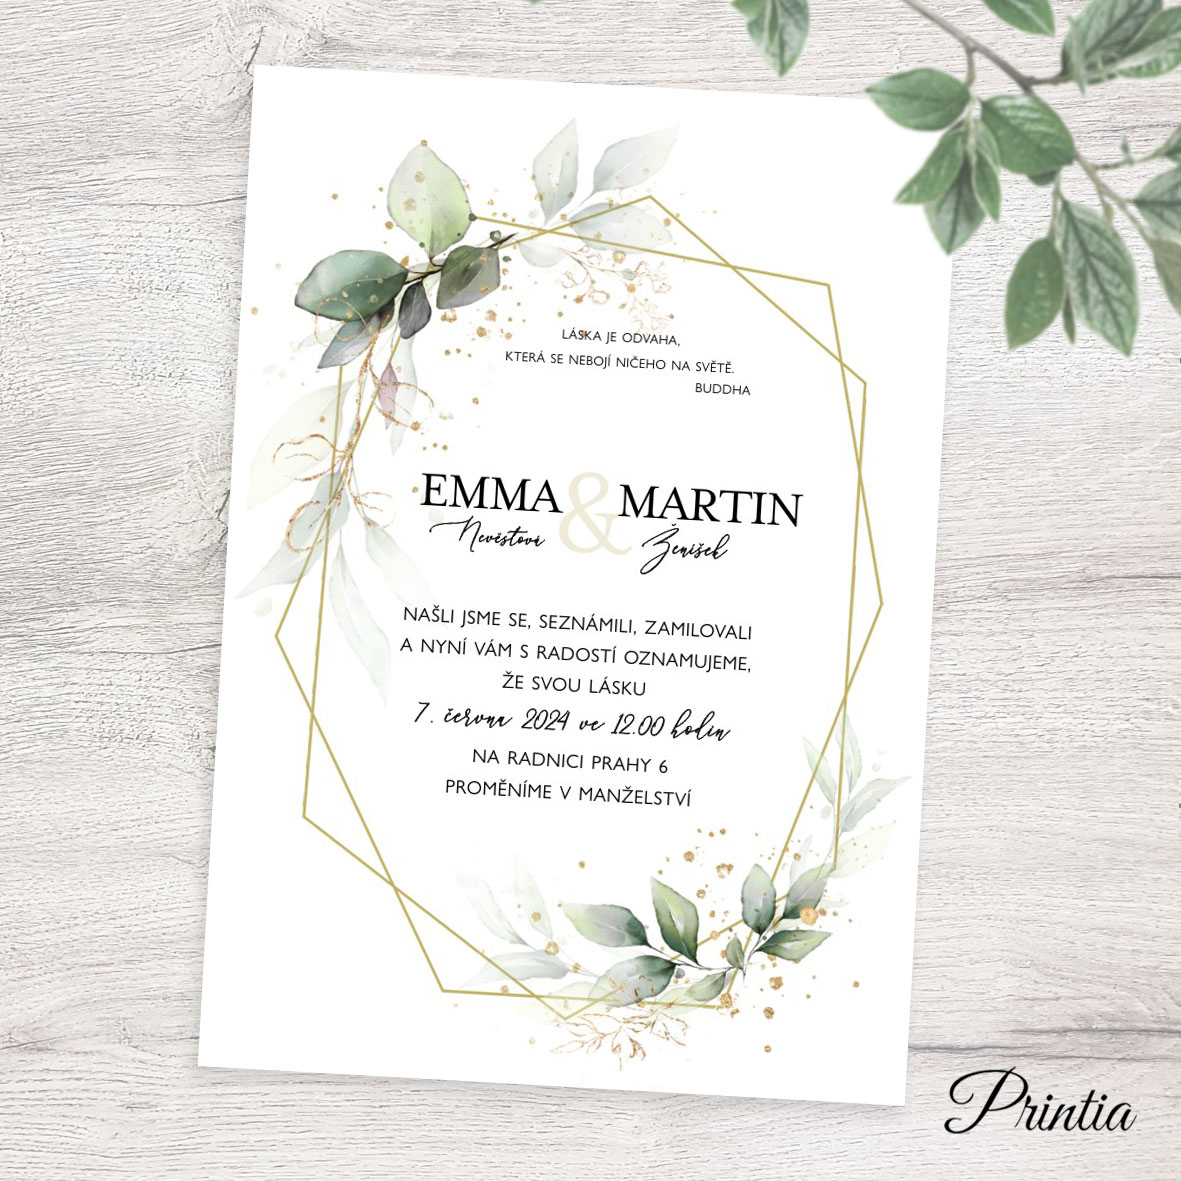 Geometric wedding invitation with leaves